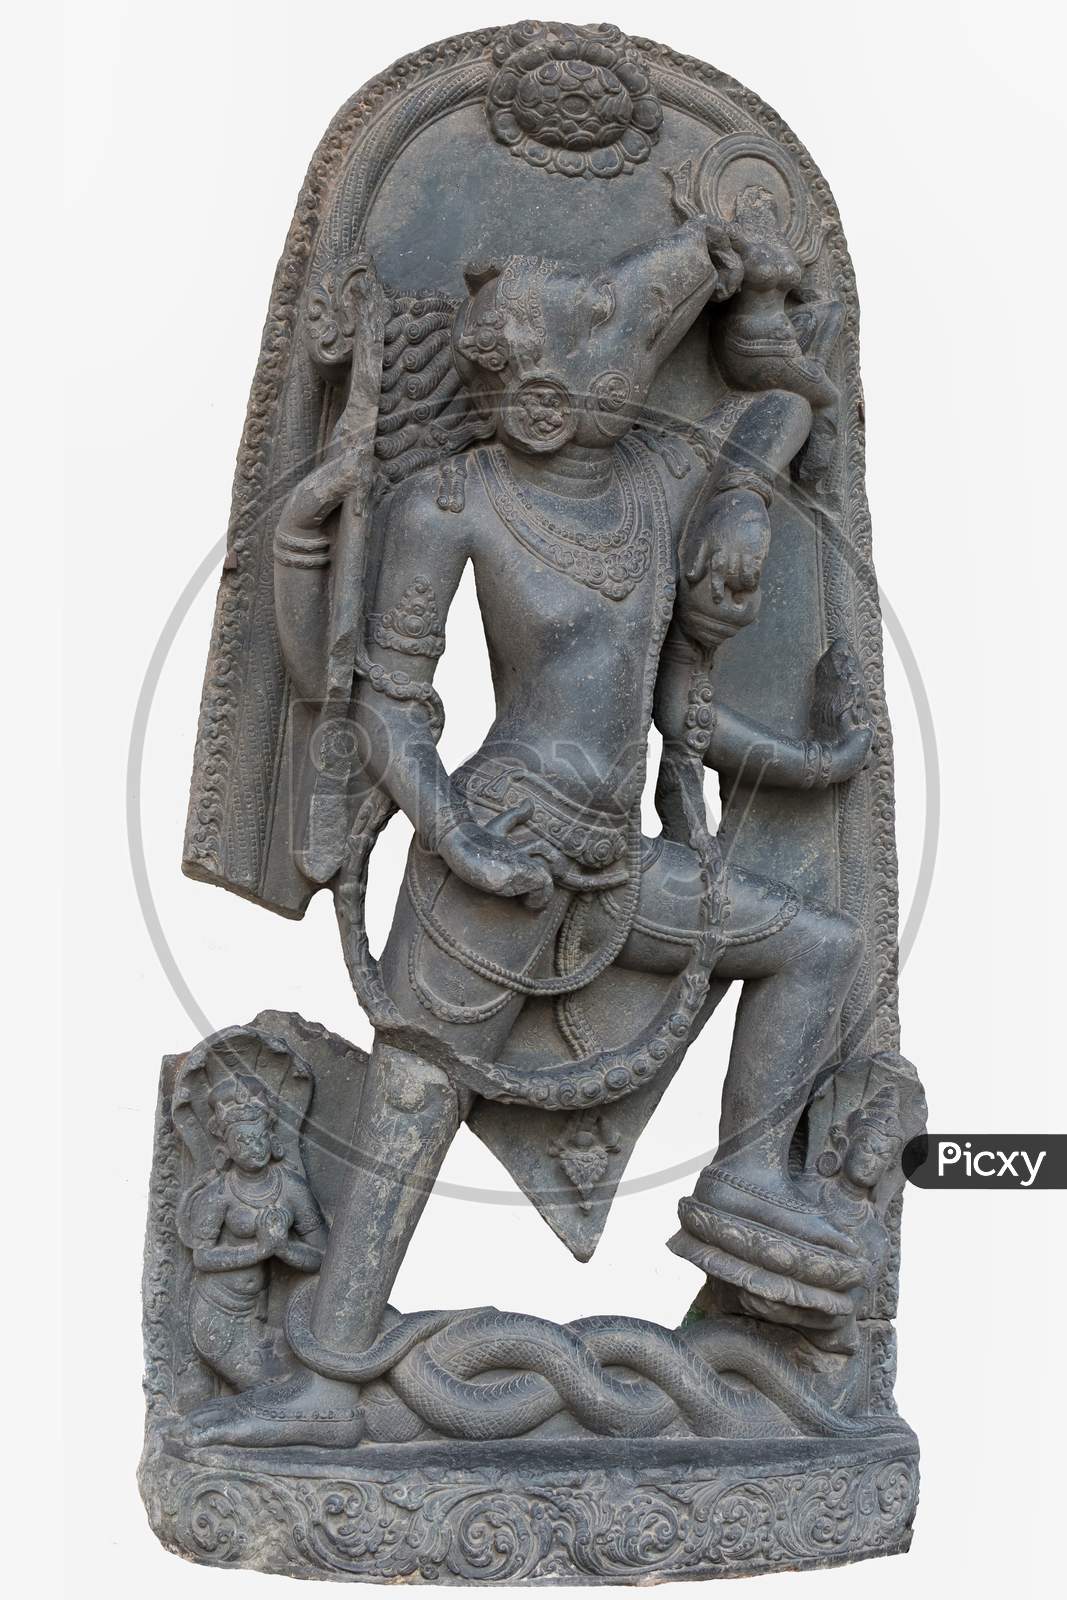 Archaeological Sculpture Of Varahavatara (The Boar Incarnation Of Lord Vishnu) From Tenth Century, Basalt, Surajkund, Nalanda, Bihar